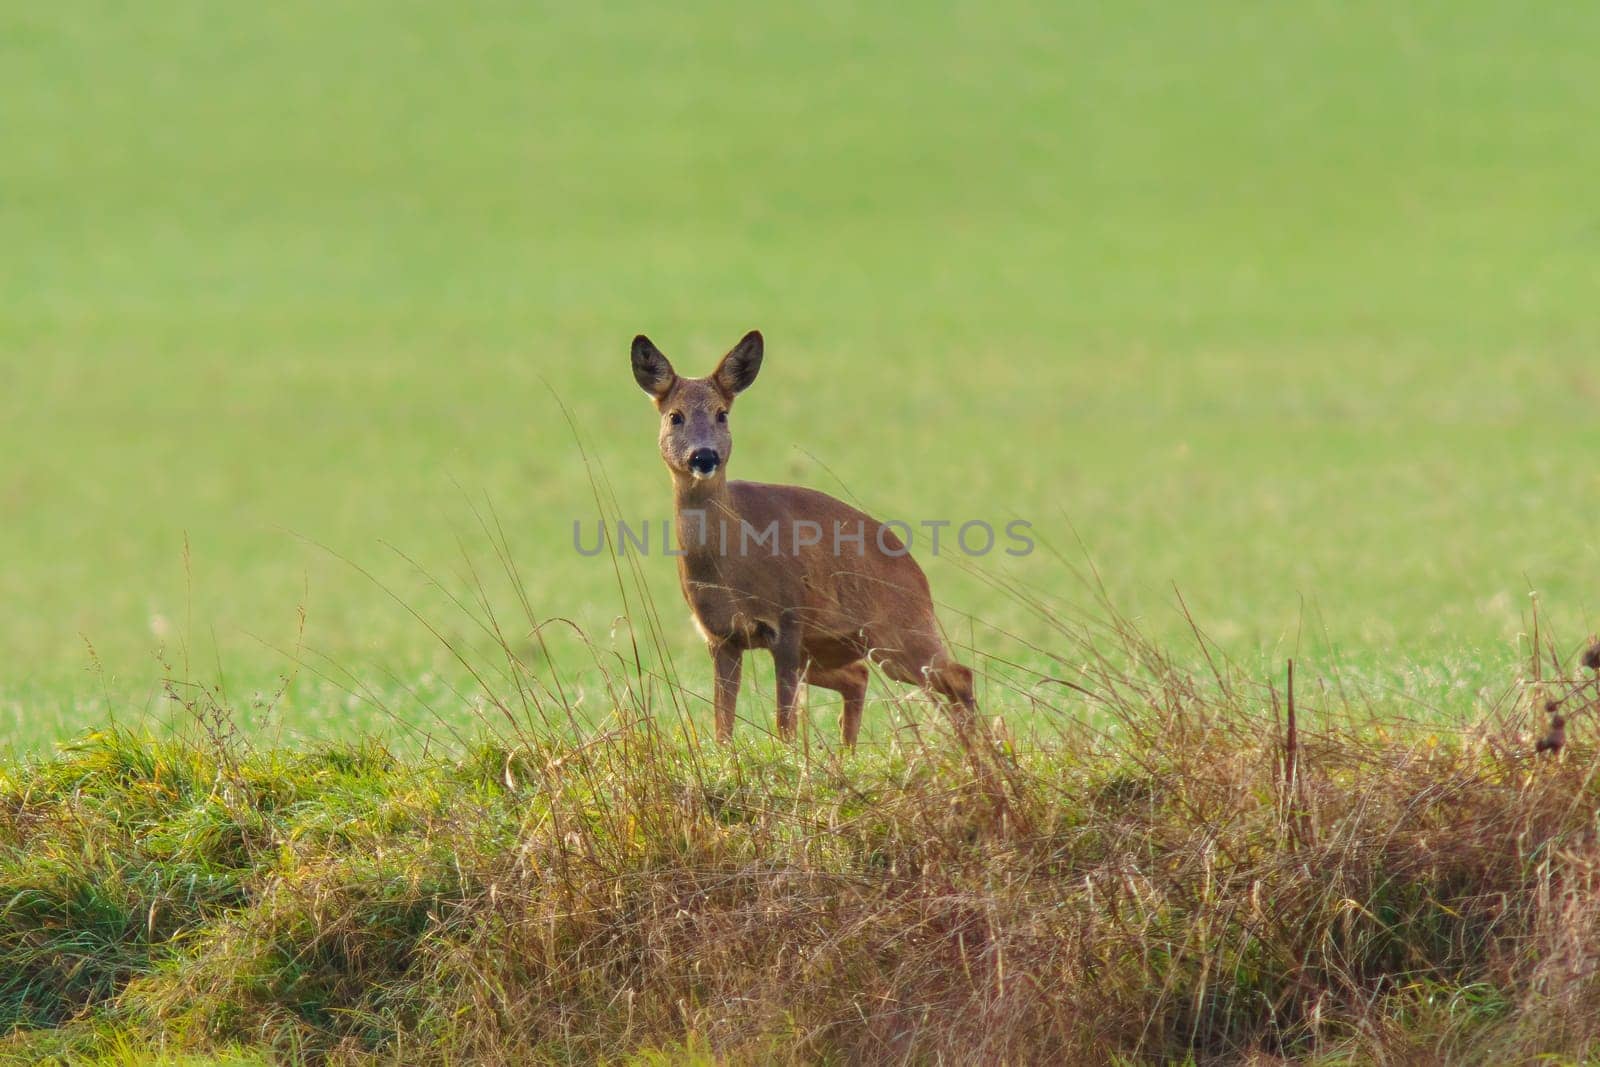 a beautiful deer doe standing on a meadow in autumn